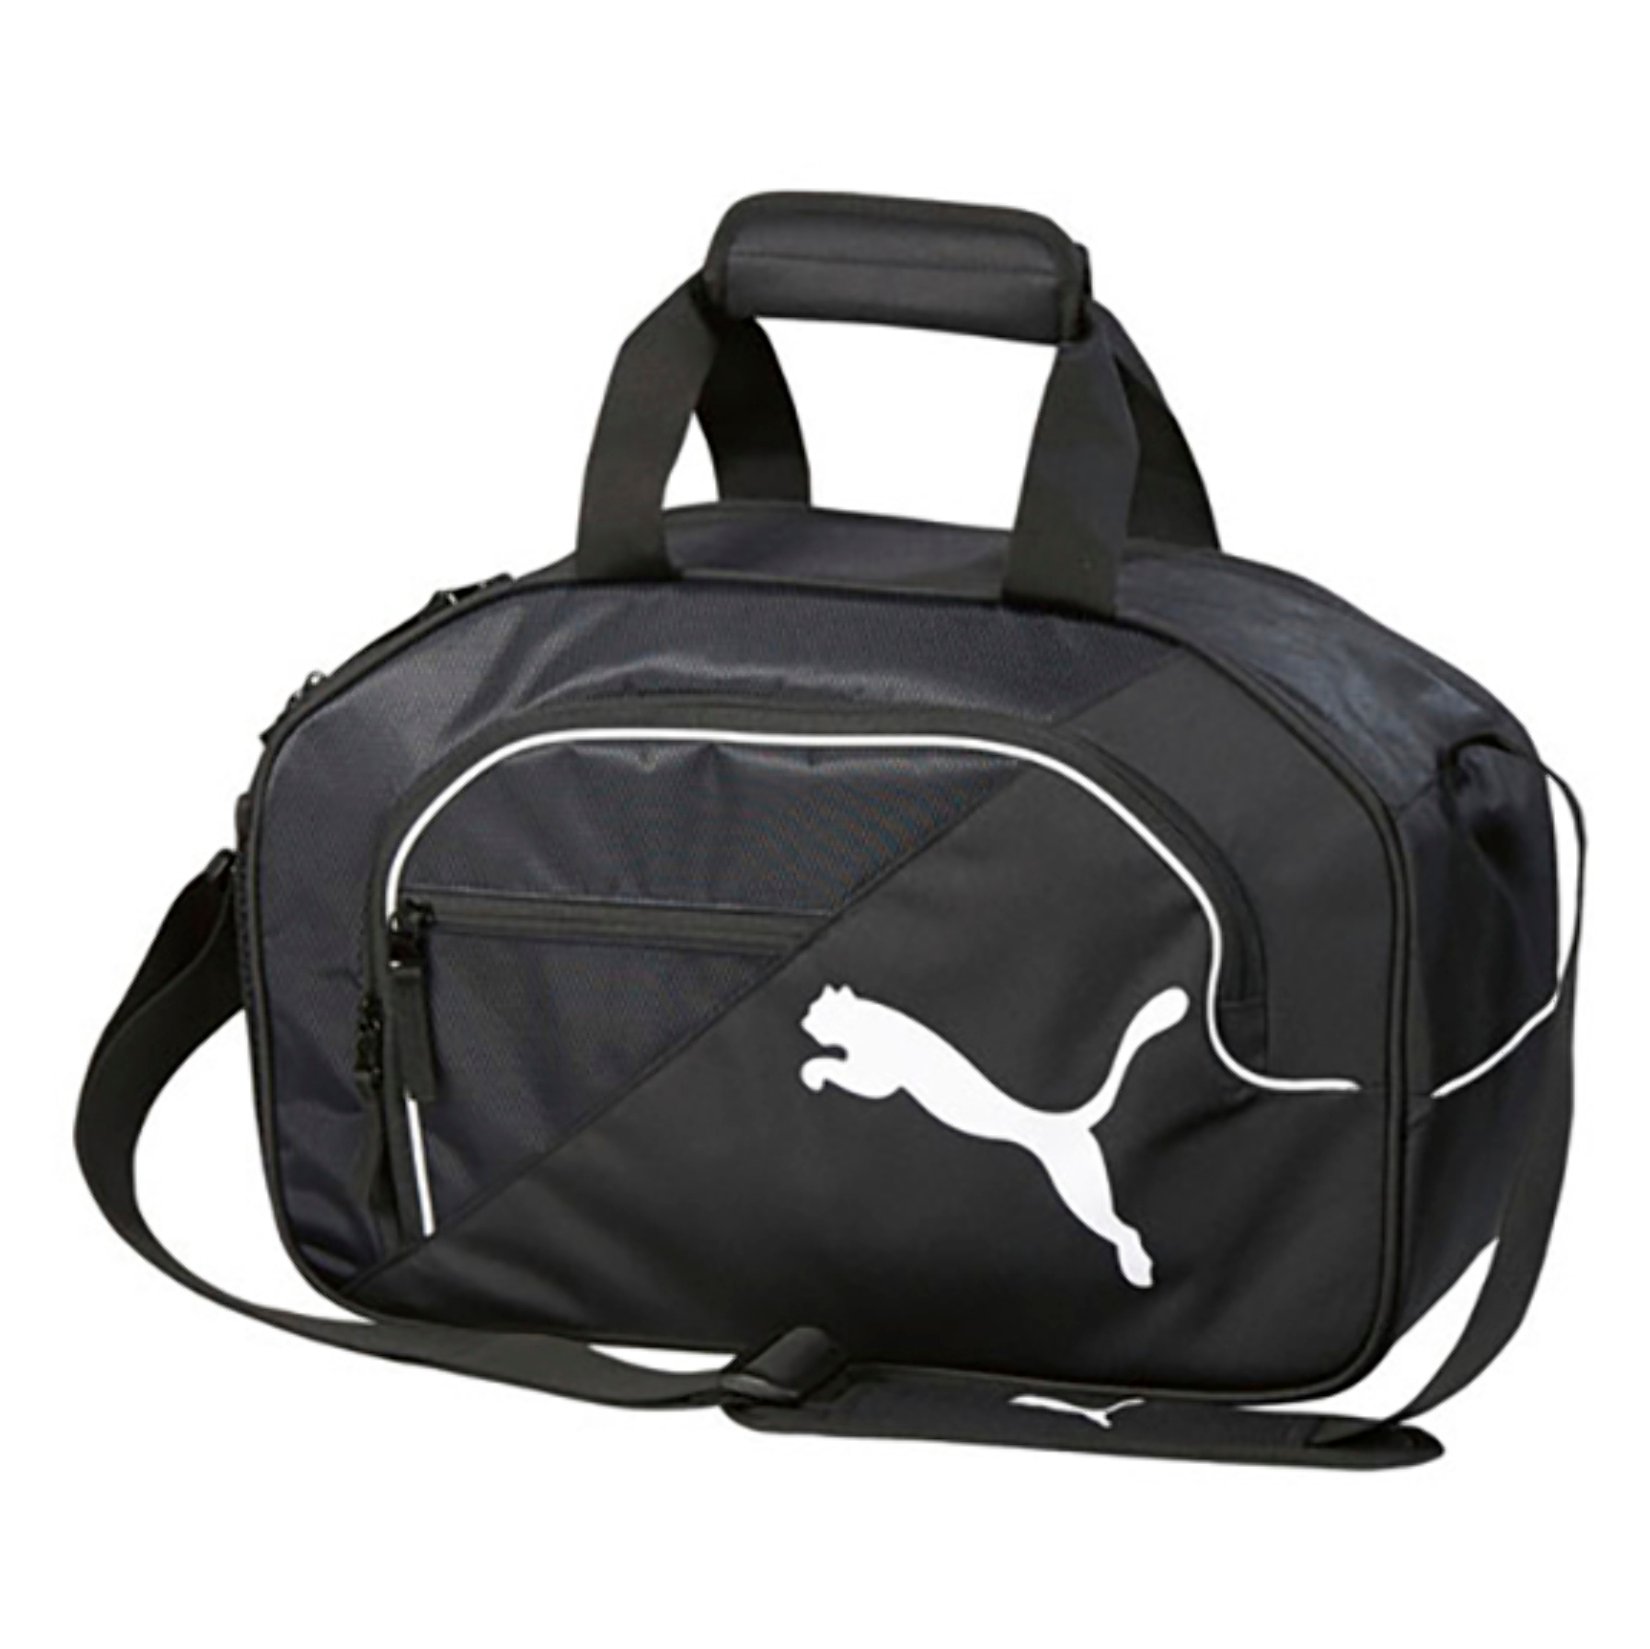 Puma Evopower Medical Bag - Kitlocker.com